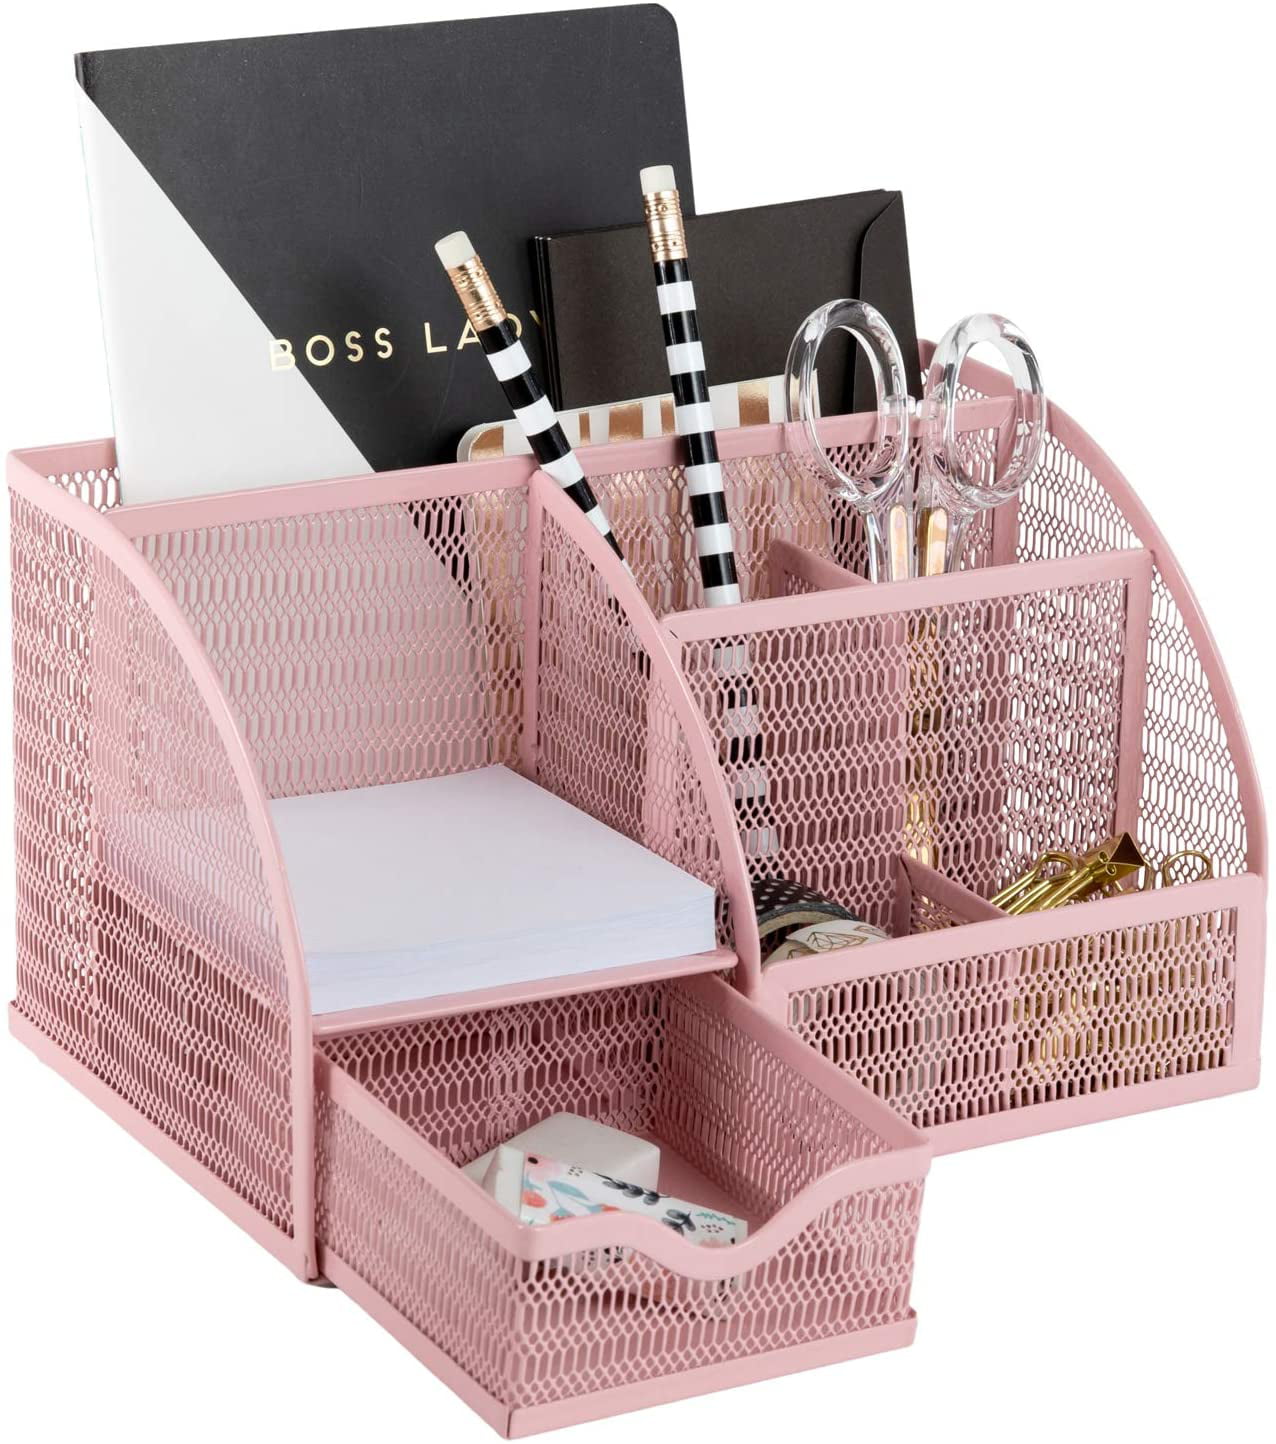 girls pink desk